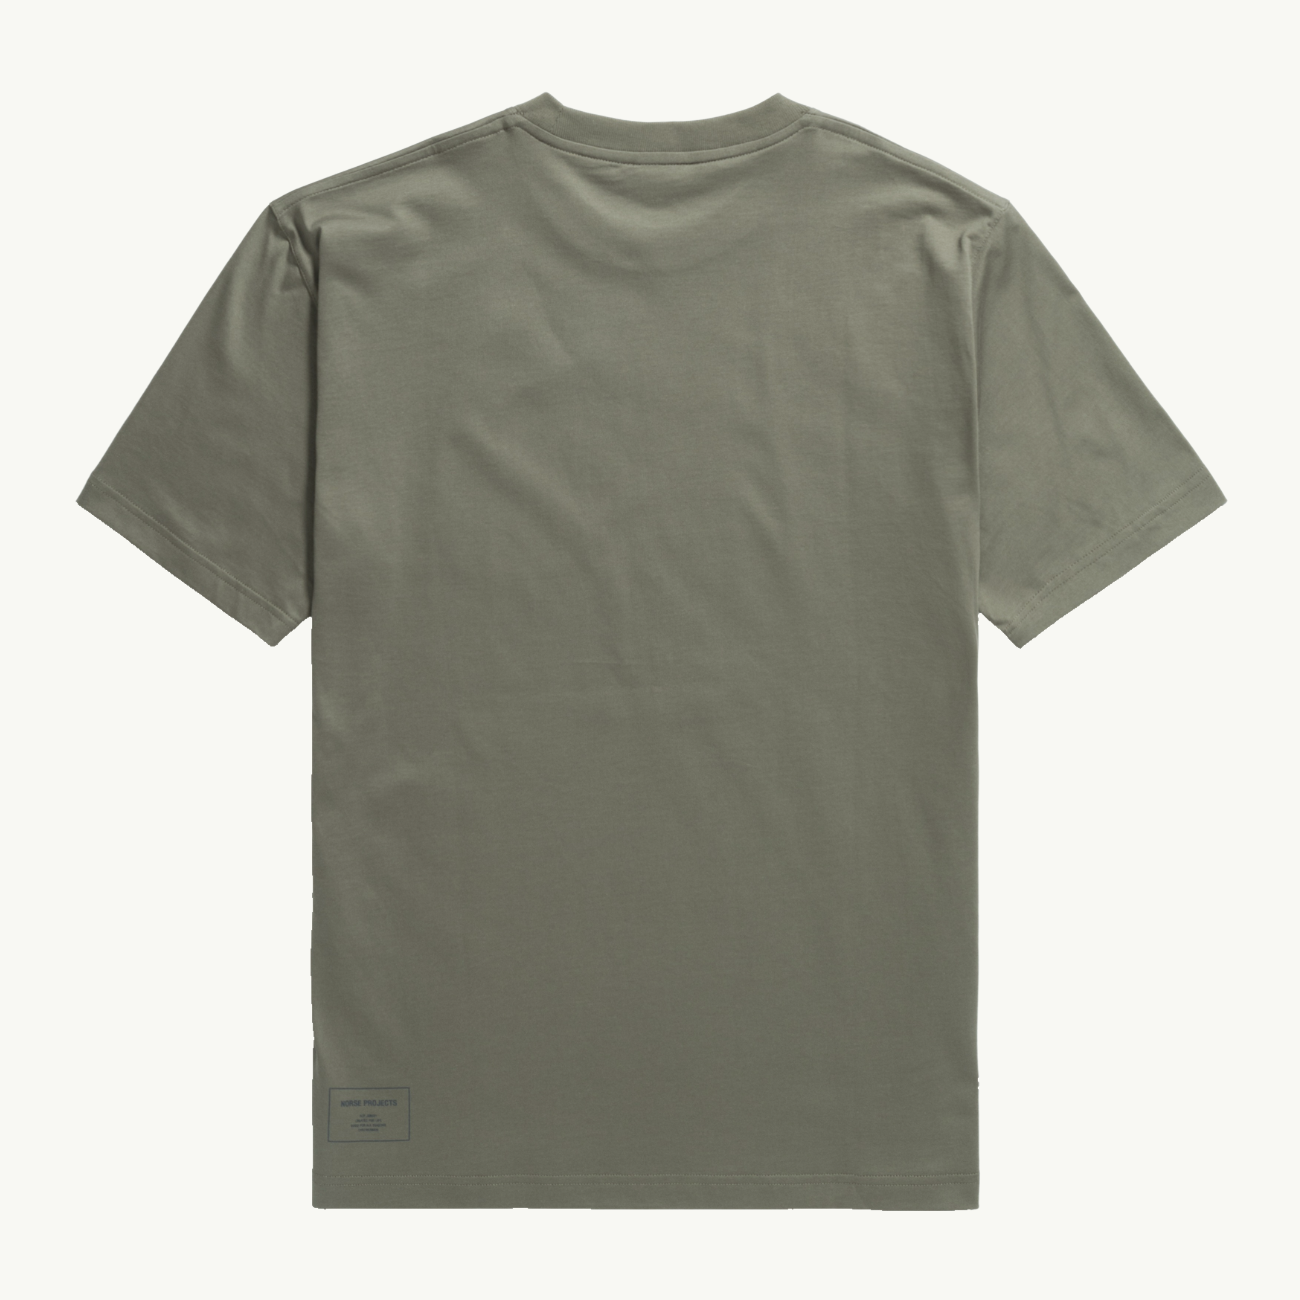 Johannes Organic 'Circle' Print T-Shirt - Sediment Green